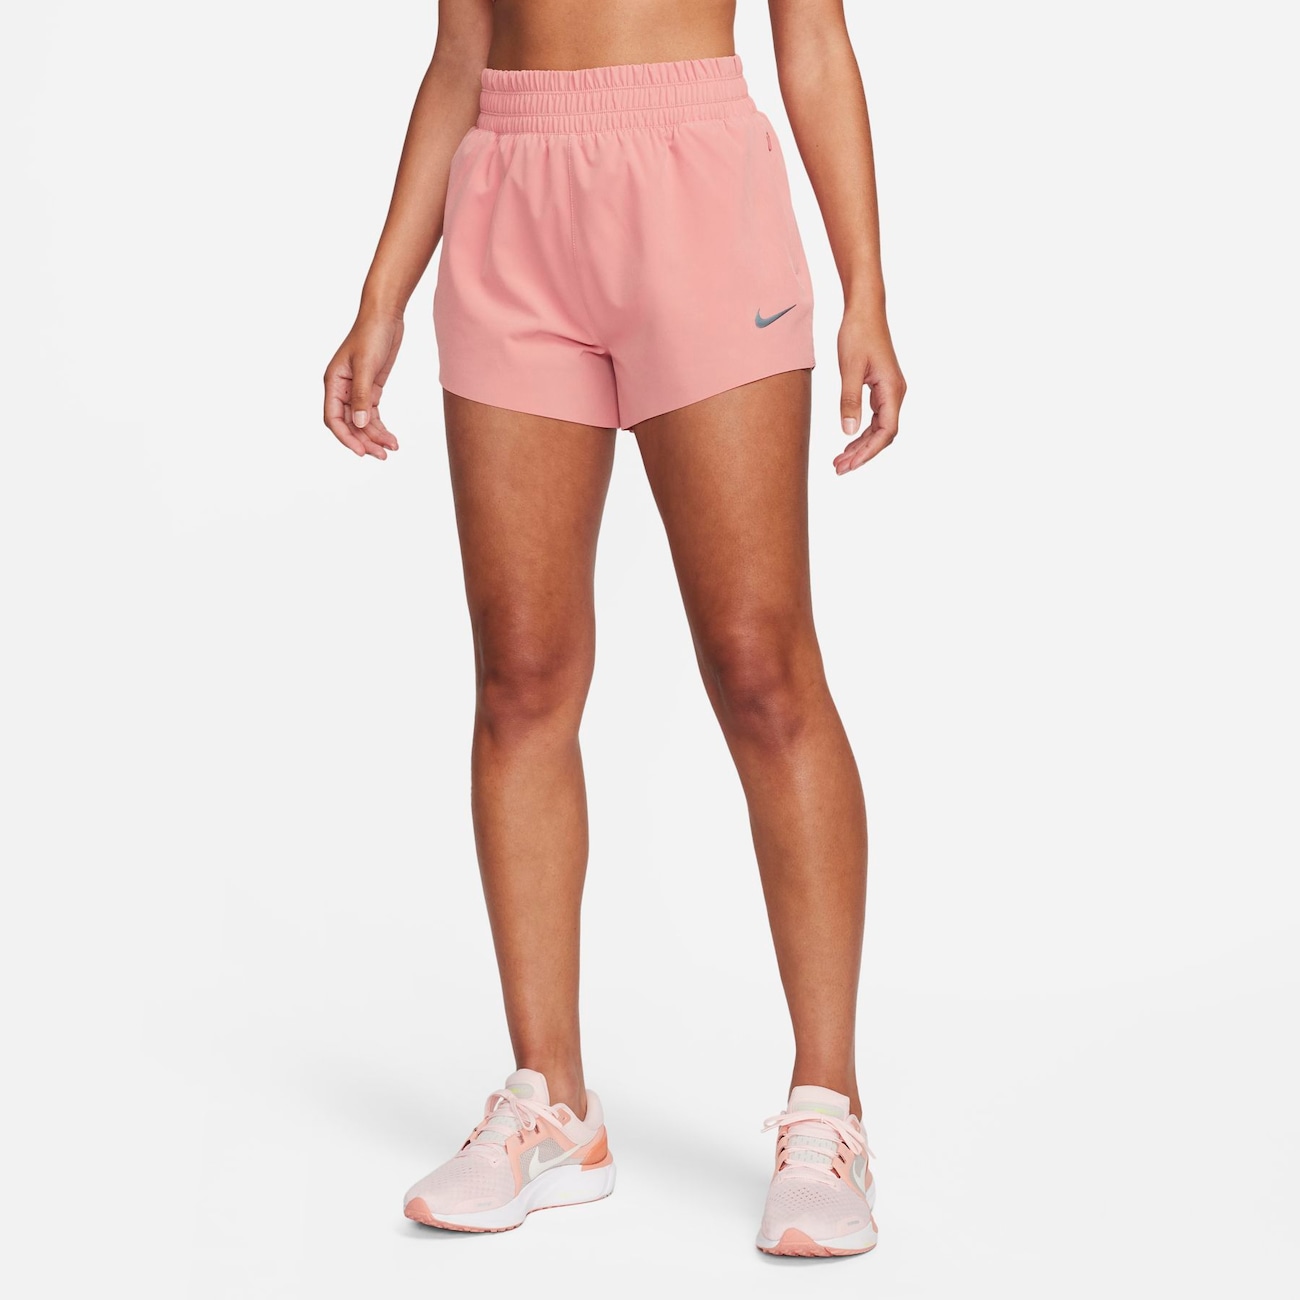 Nike Dri-FIT Running Division hardloopshorts met binnenbroekje, hoge taille en zakken voor dames (8 cm) - Roze